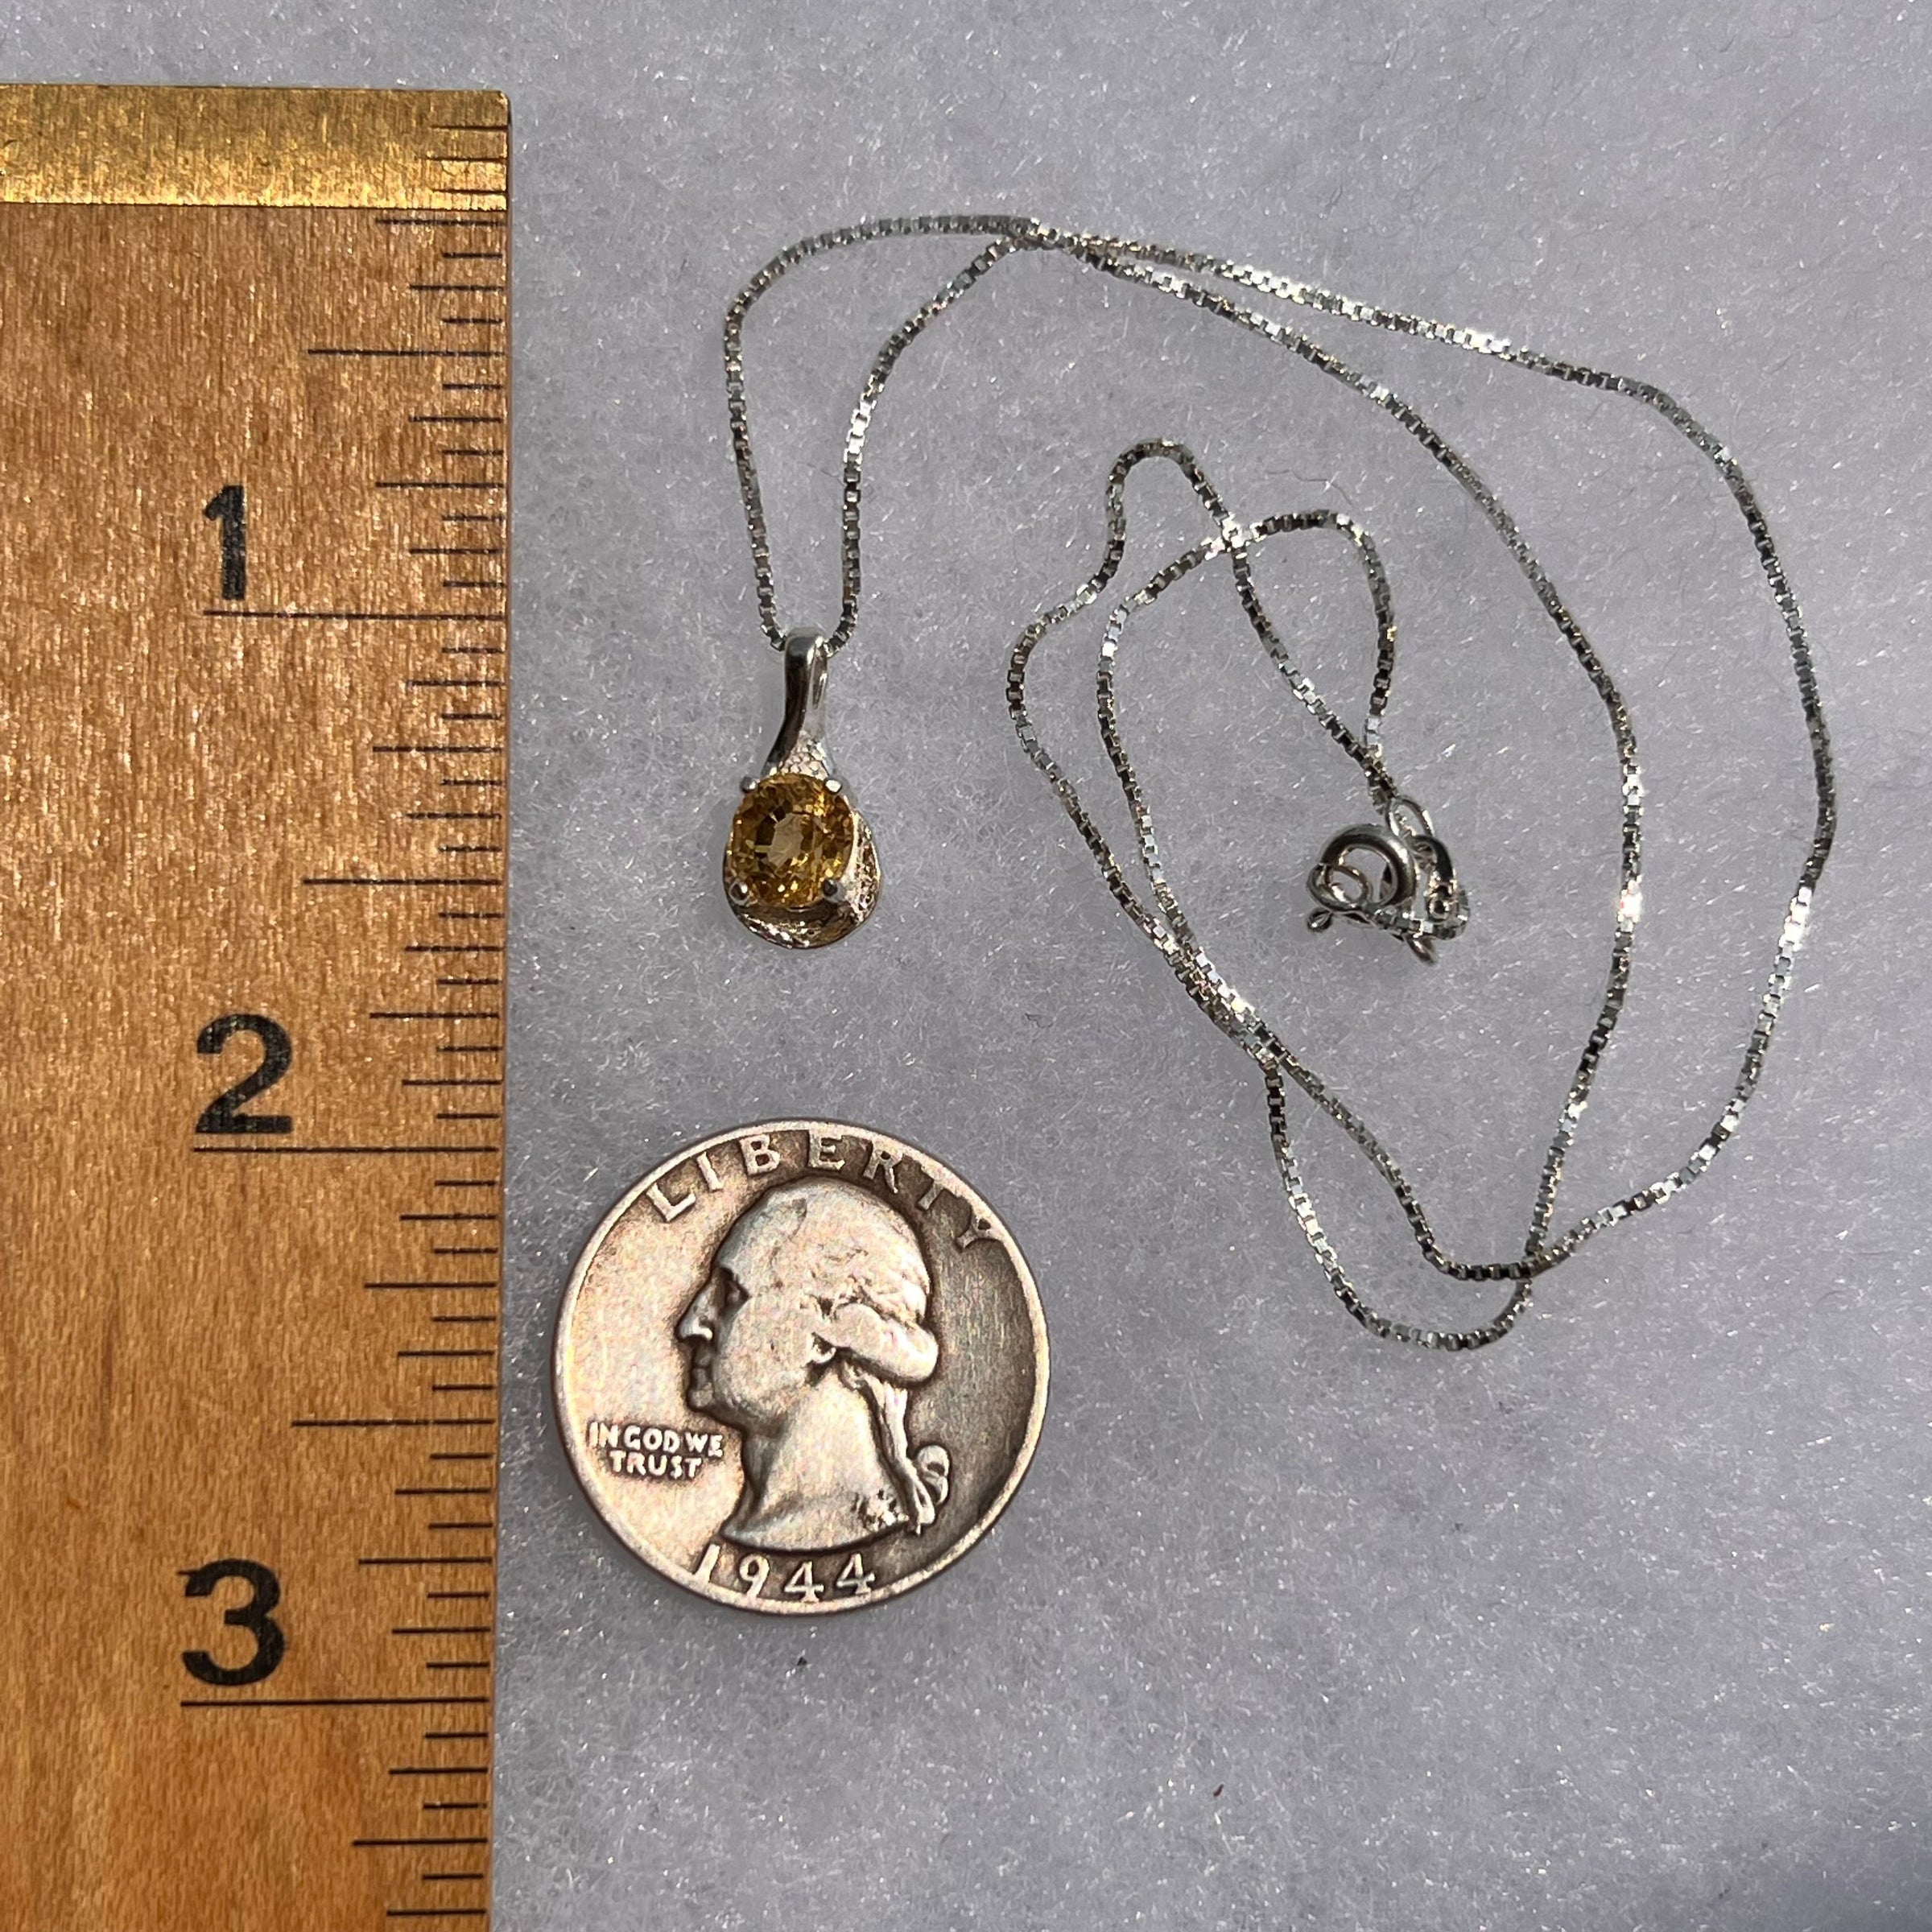 Yellow Danburite Pendant Necklace Sterling Silver #5260-Moldavite Life